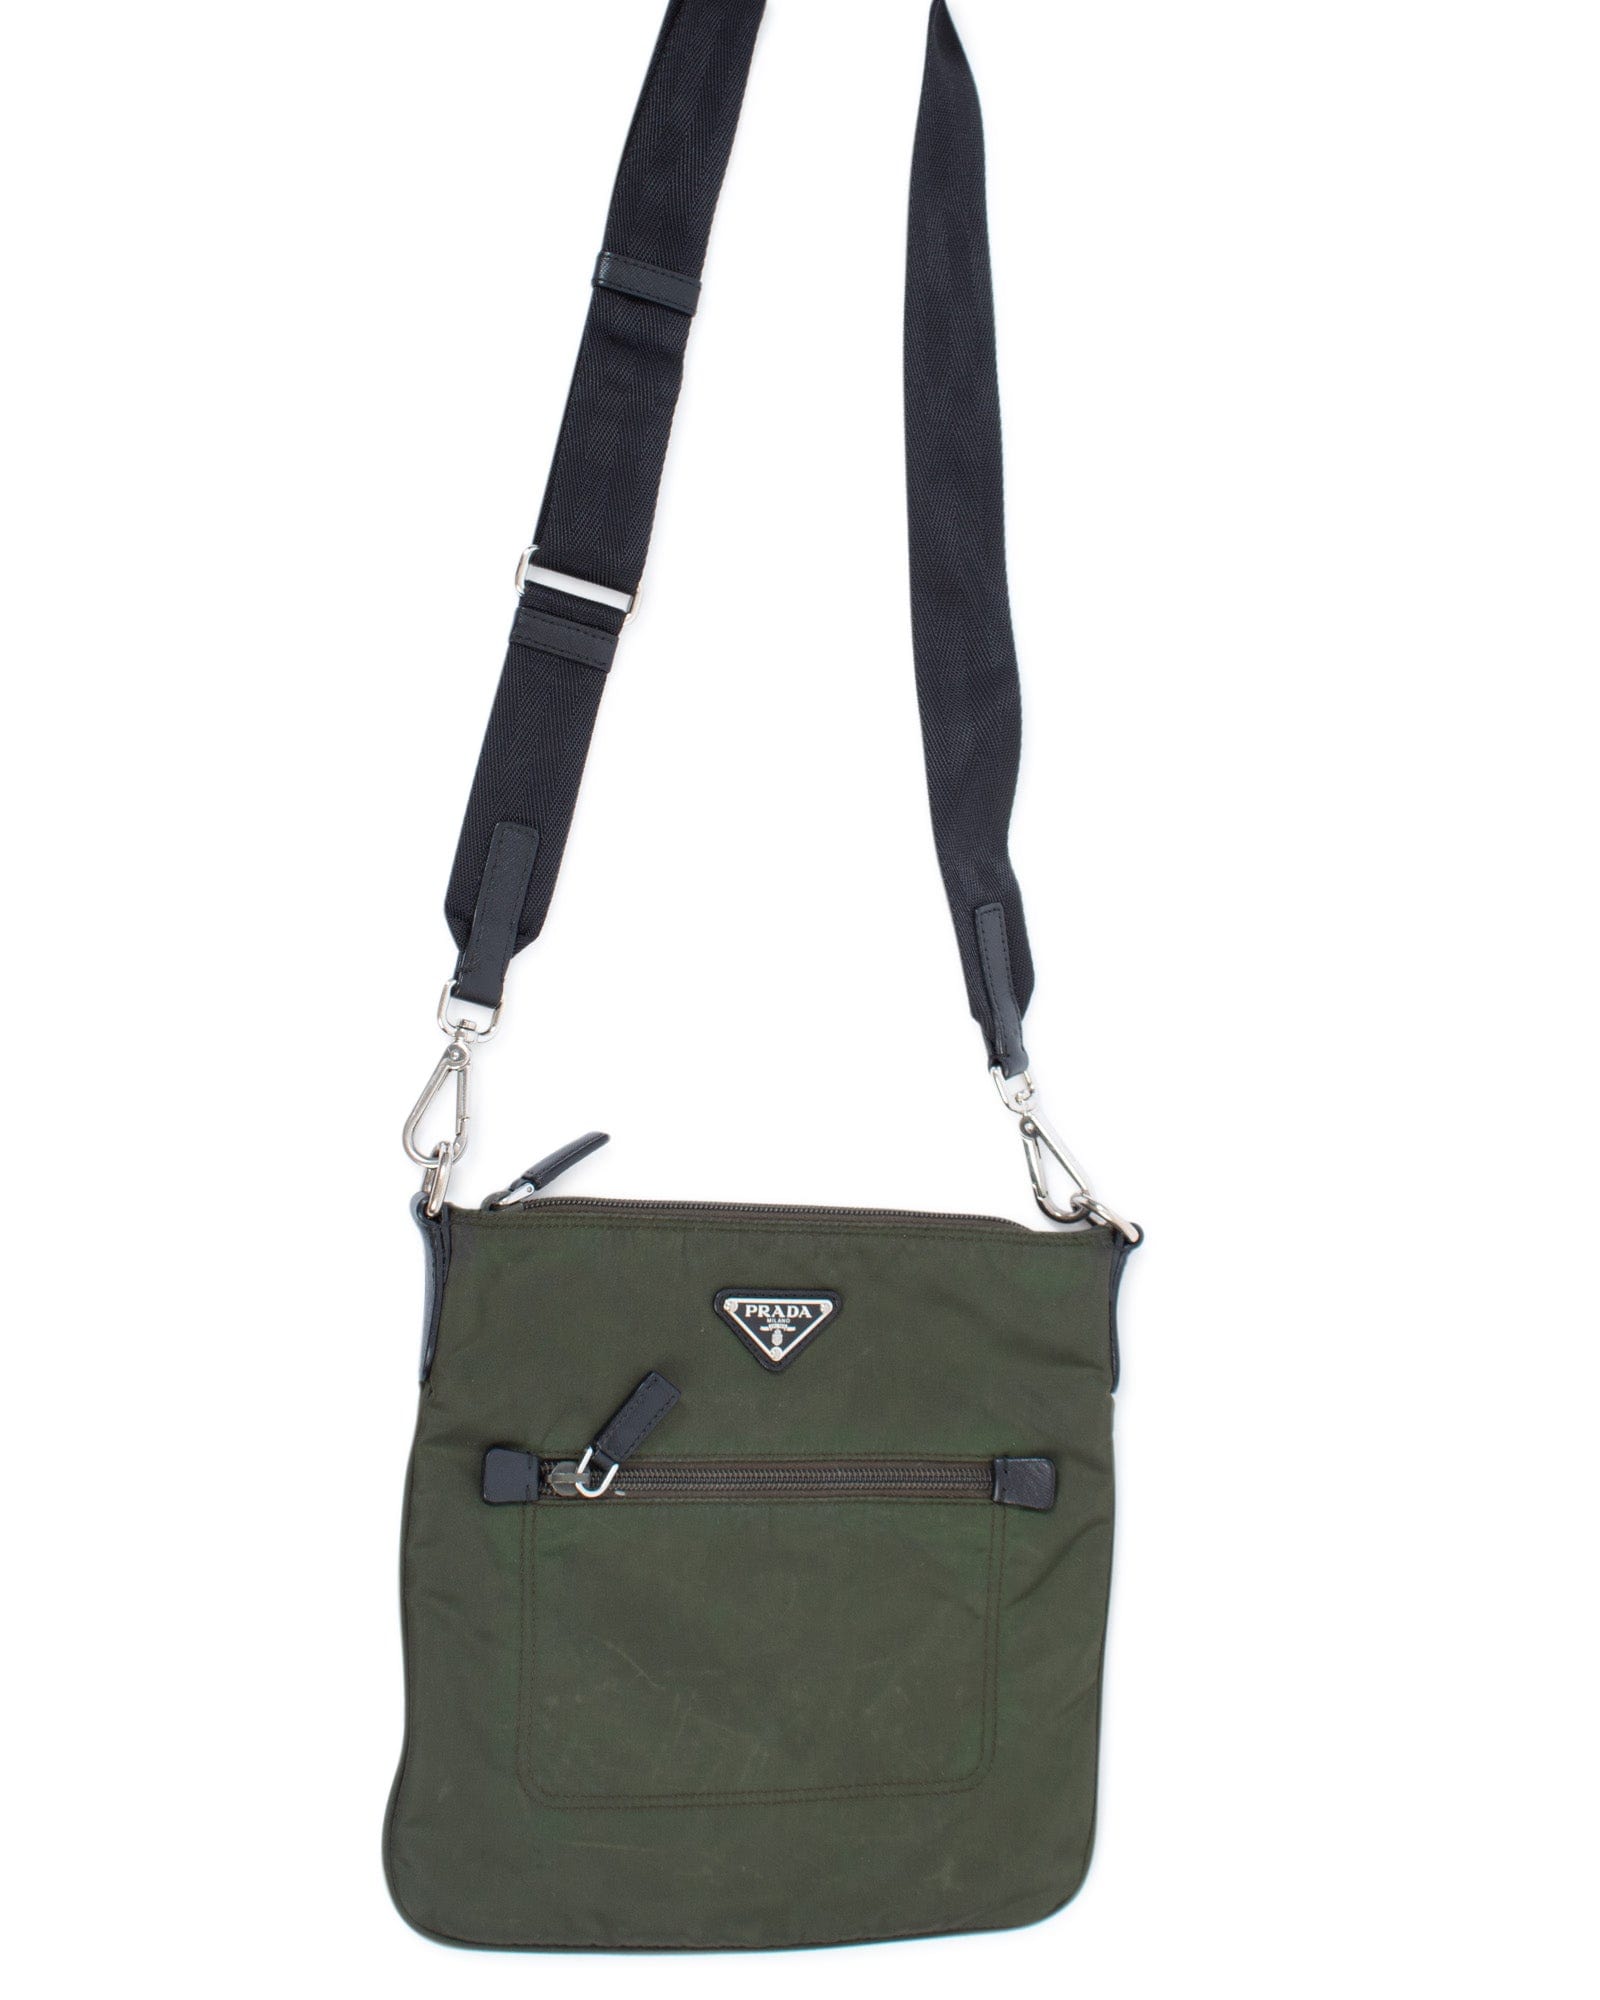 Emerald Green Medium Prada Galleria Saffiano Leather Bag | PRADA